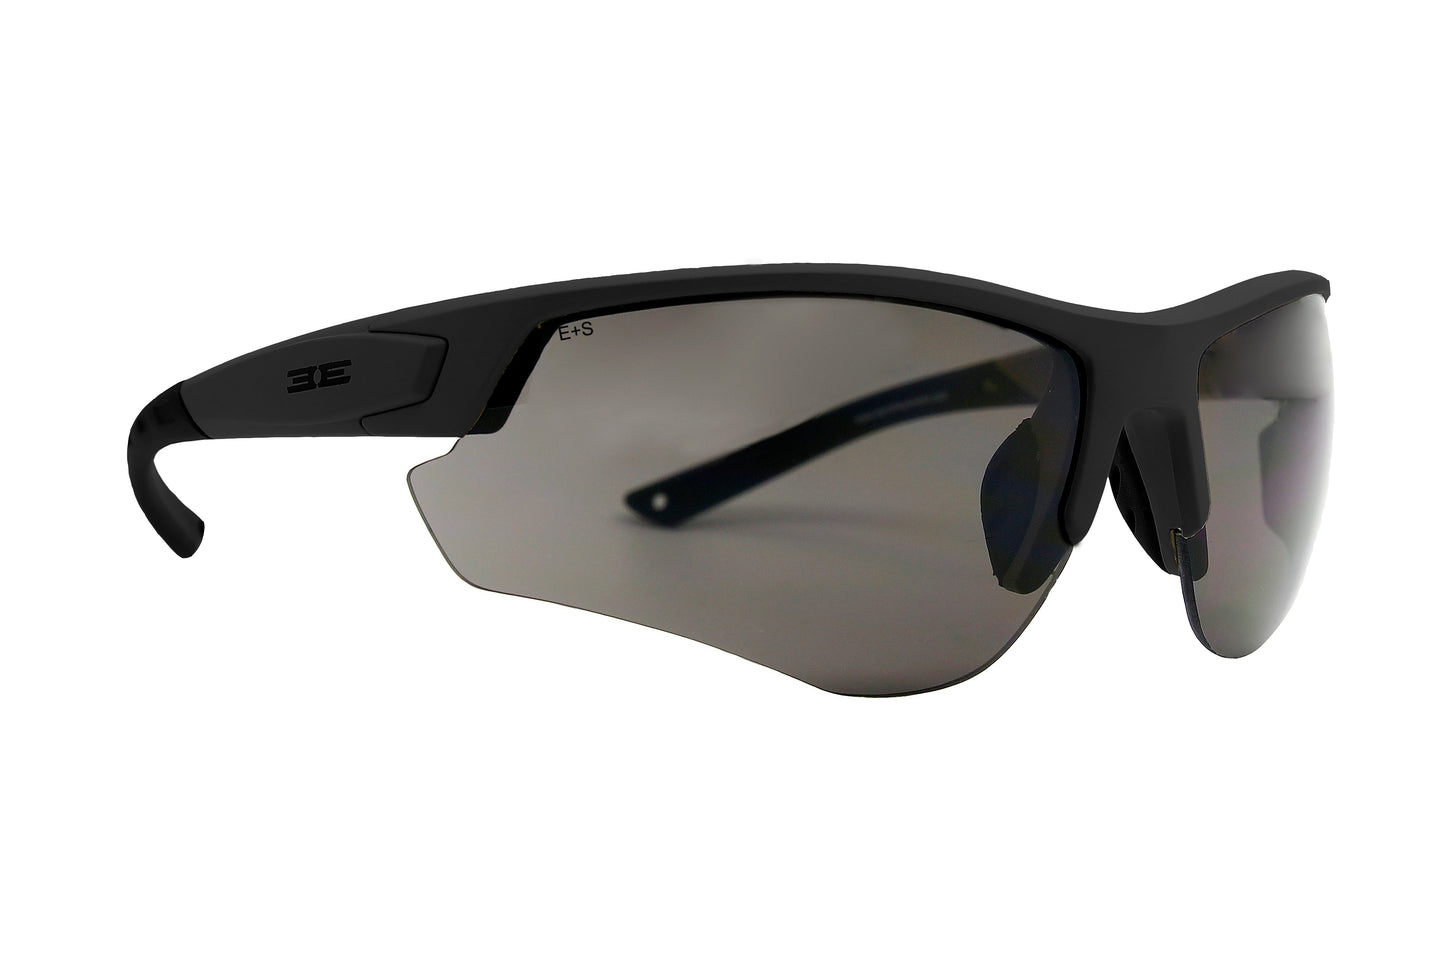 Epoch Eyewear Grunt Black Frame Men's Sunglasses with Smoke Safety Lens